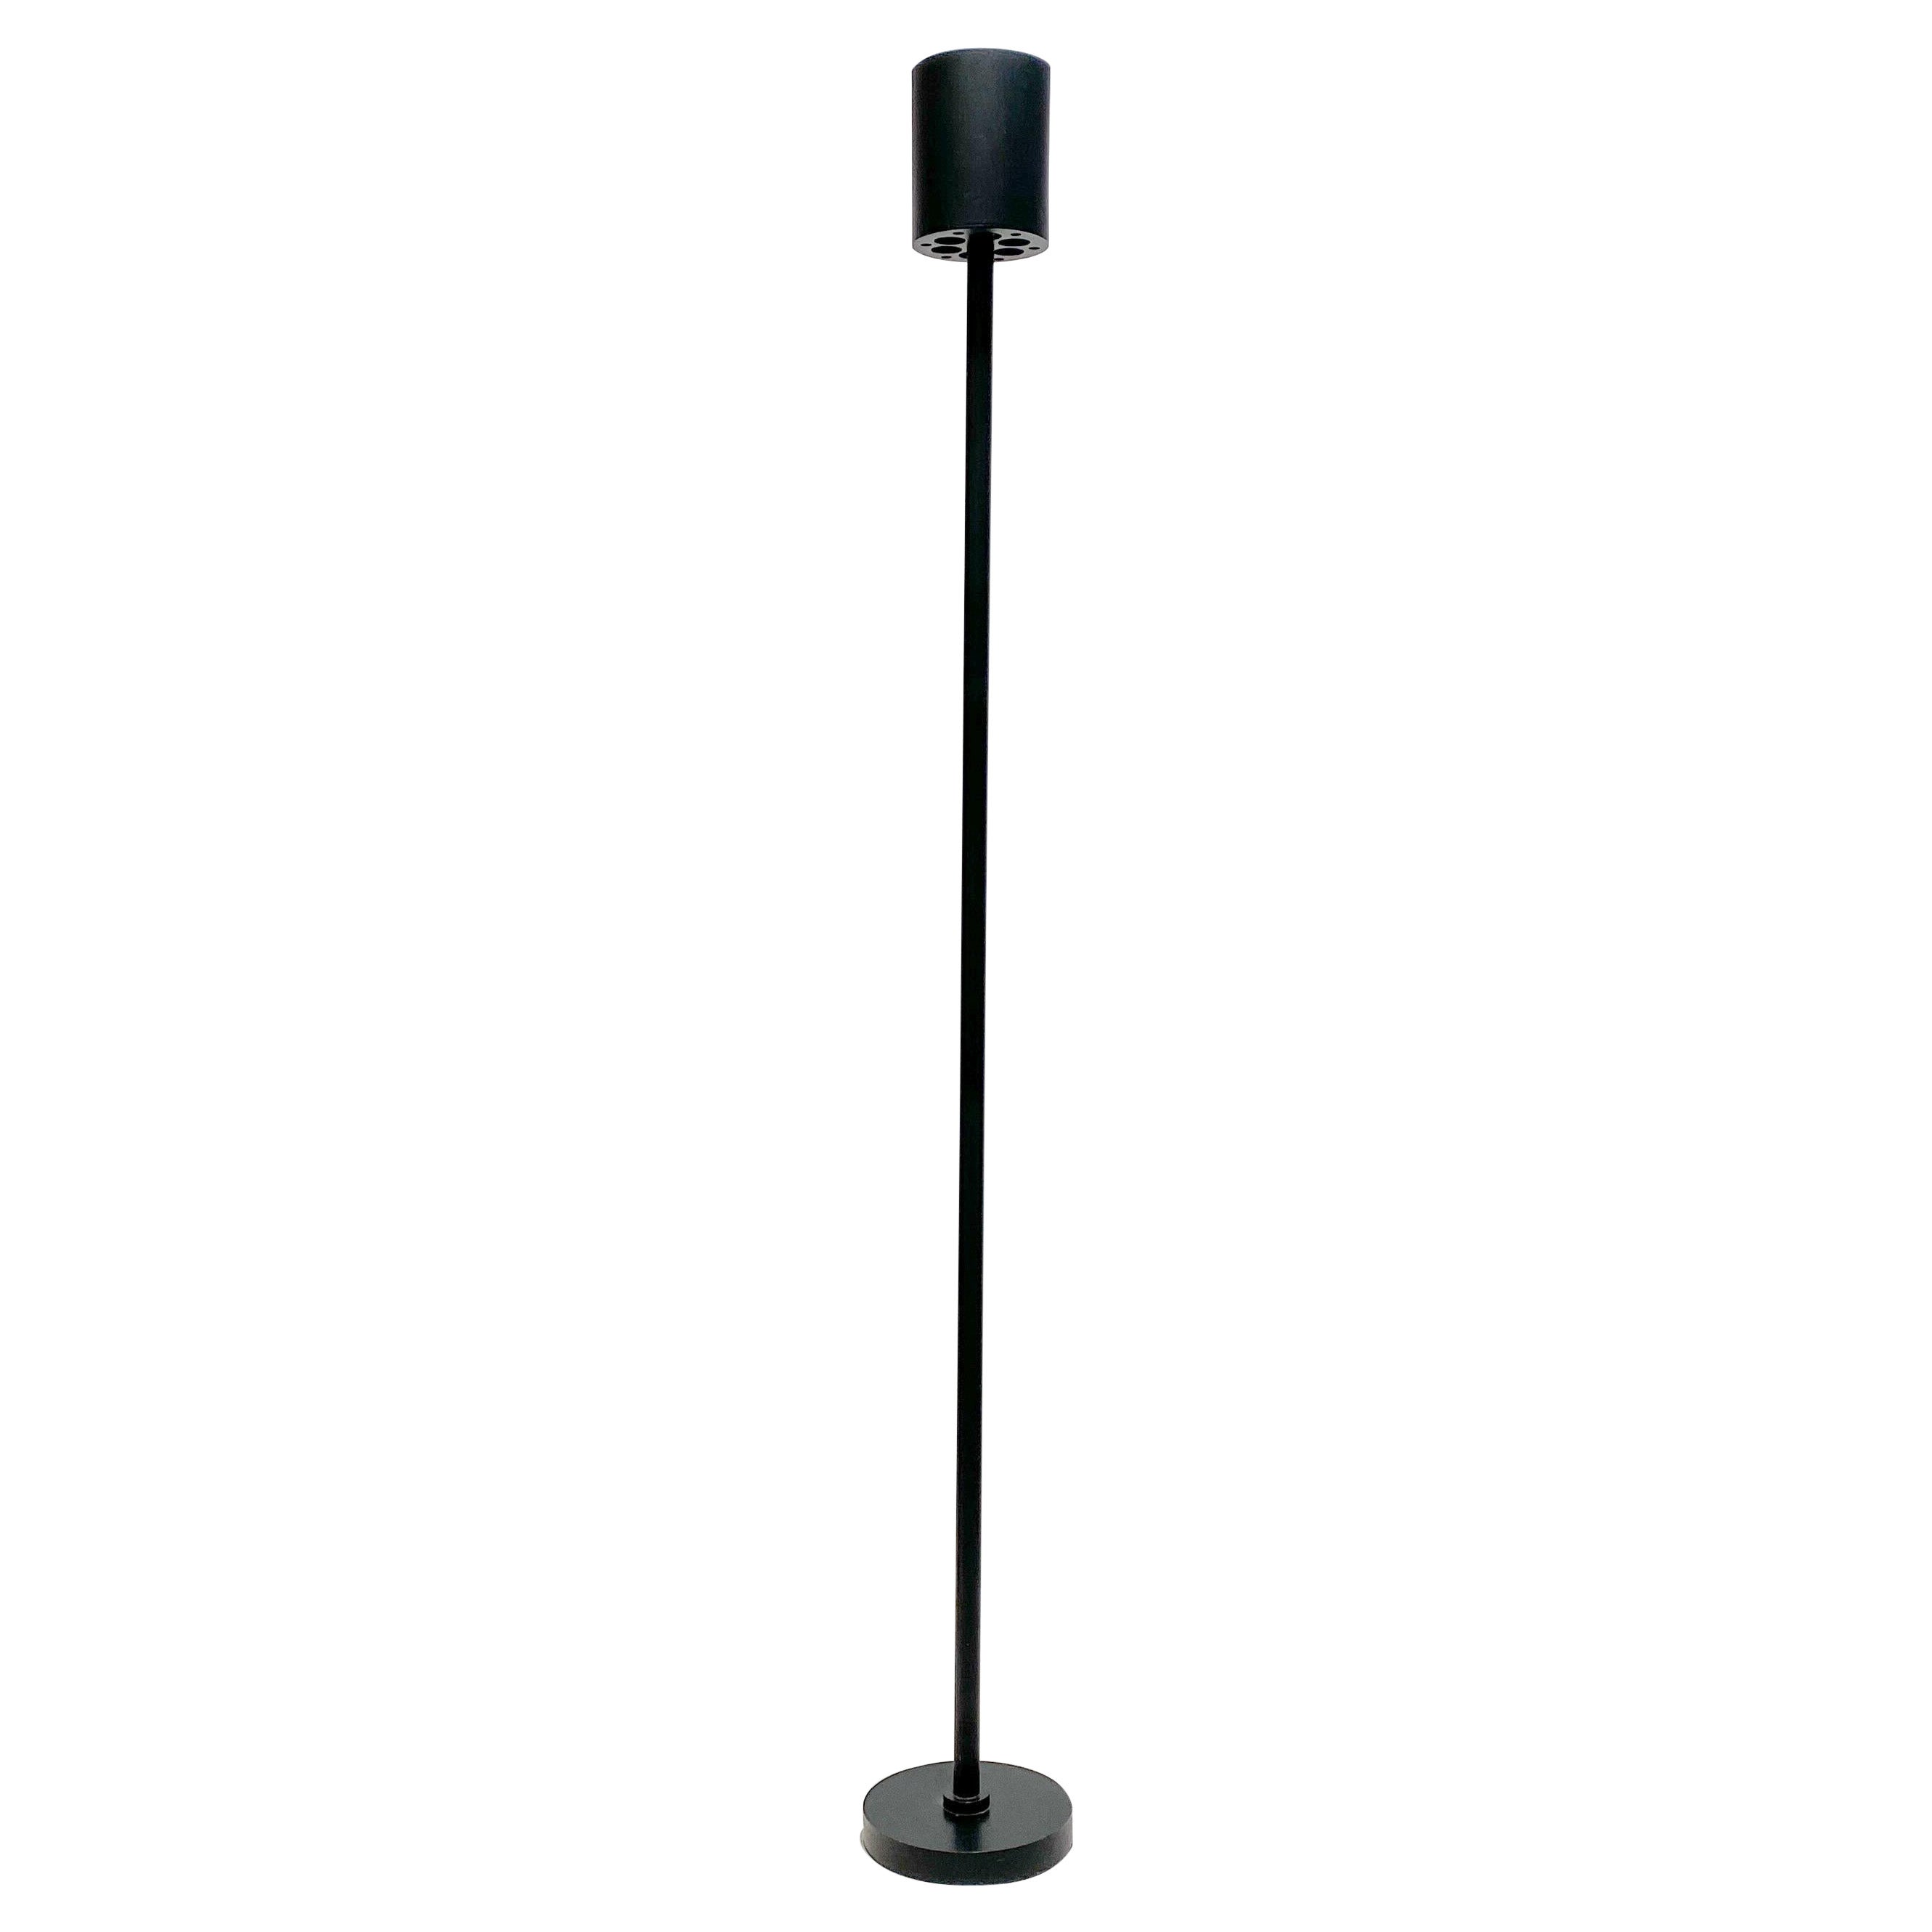 Wim den Boon, black one-off floorlamp icw Gispen, midcentury modern design 1950s For Sale